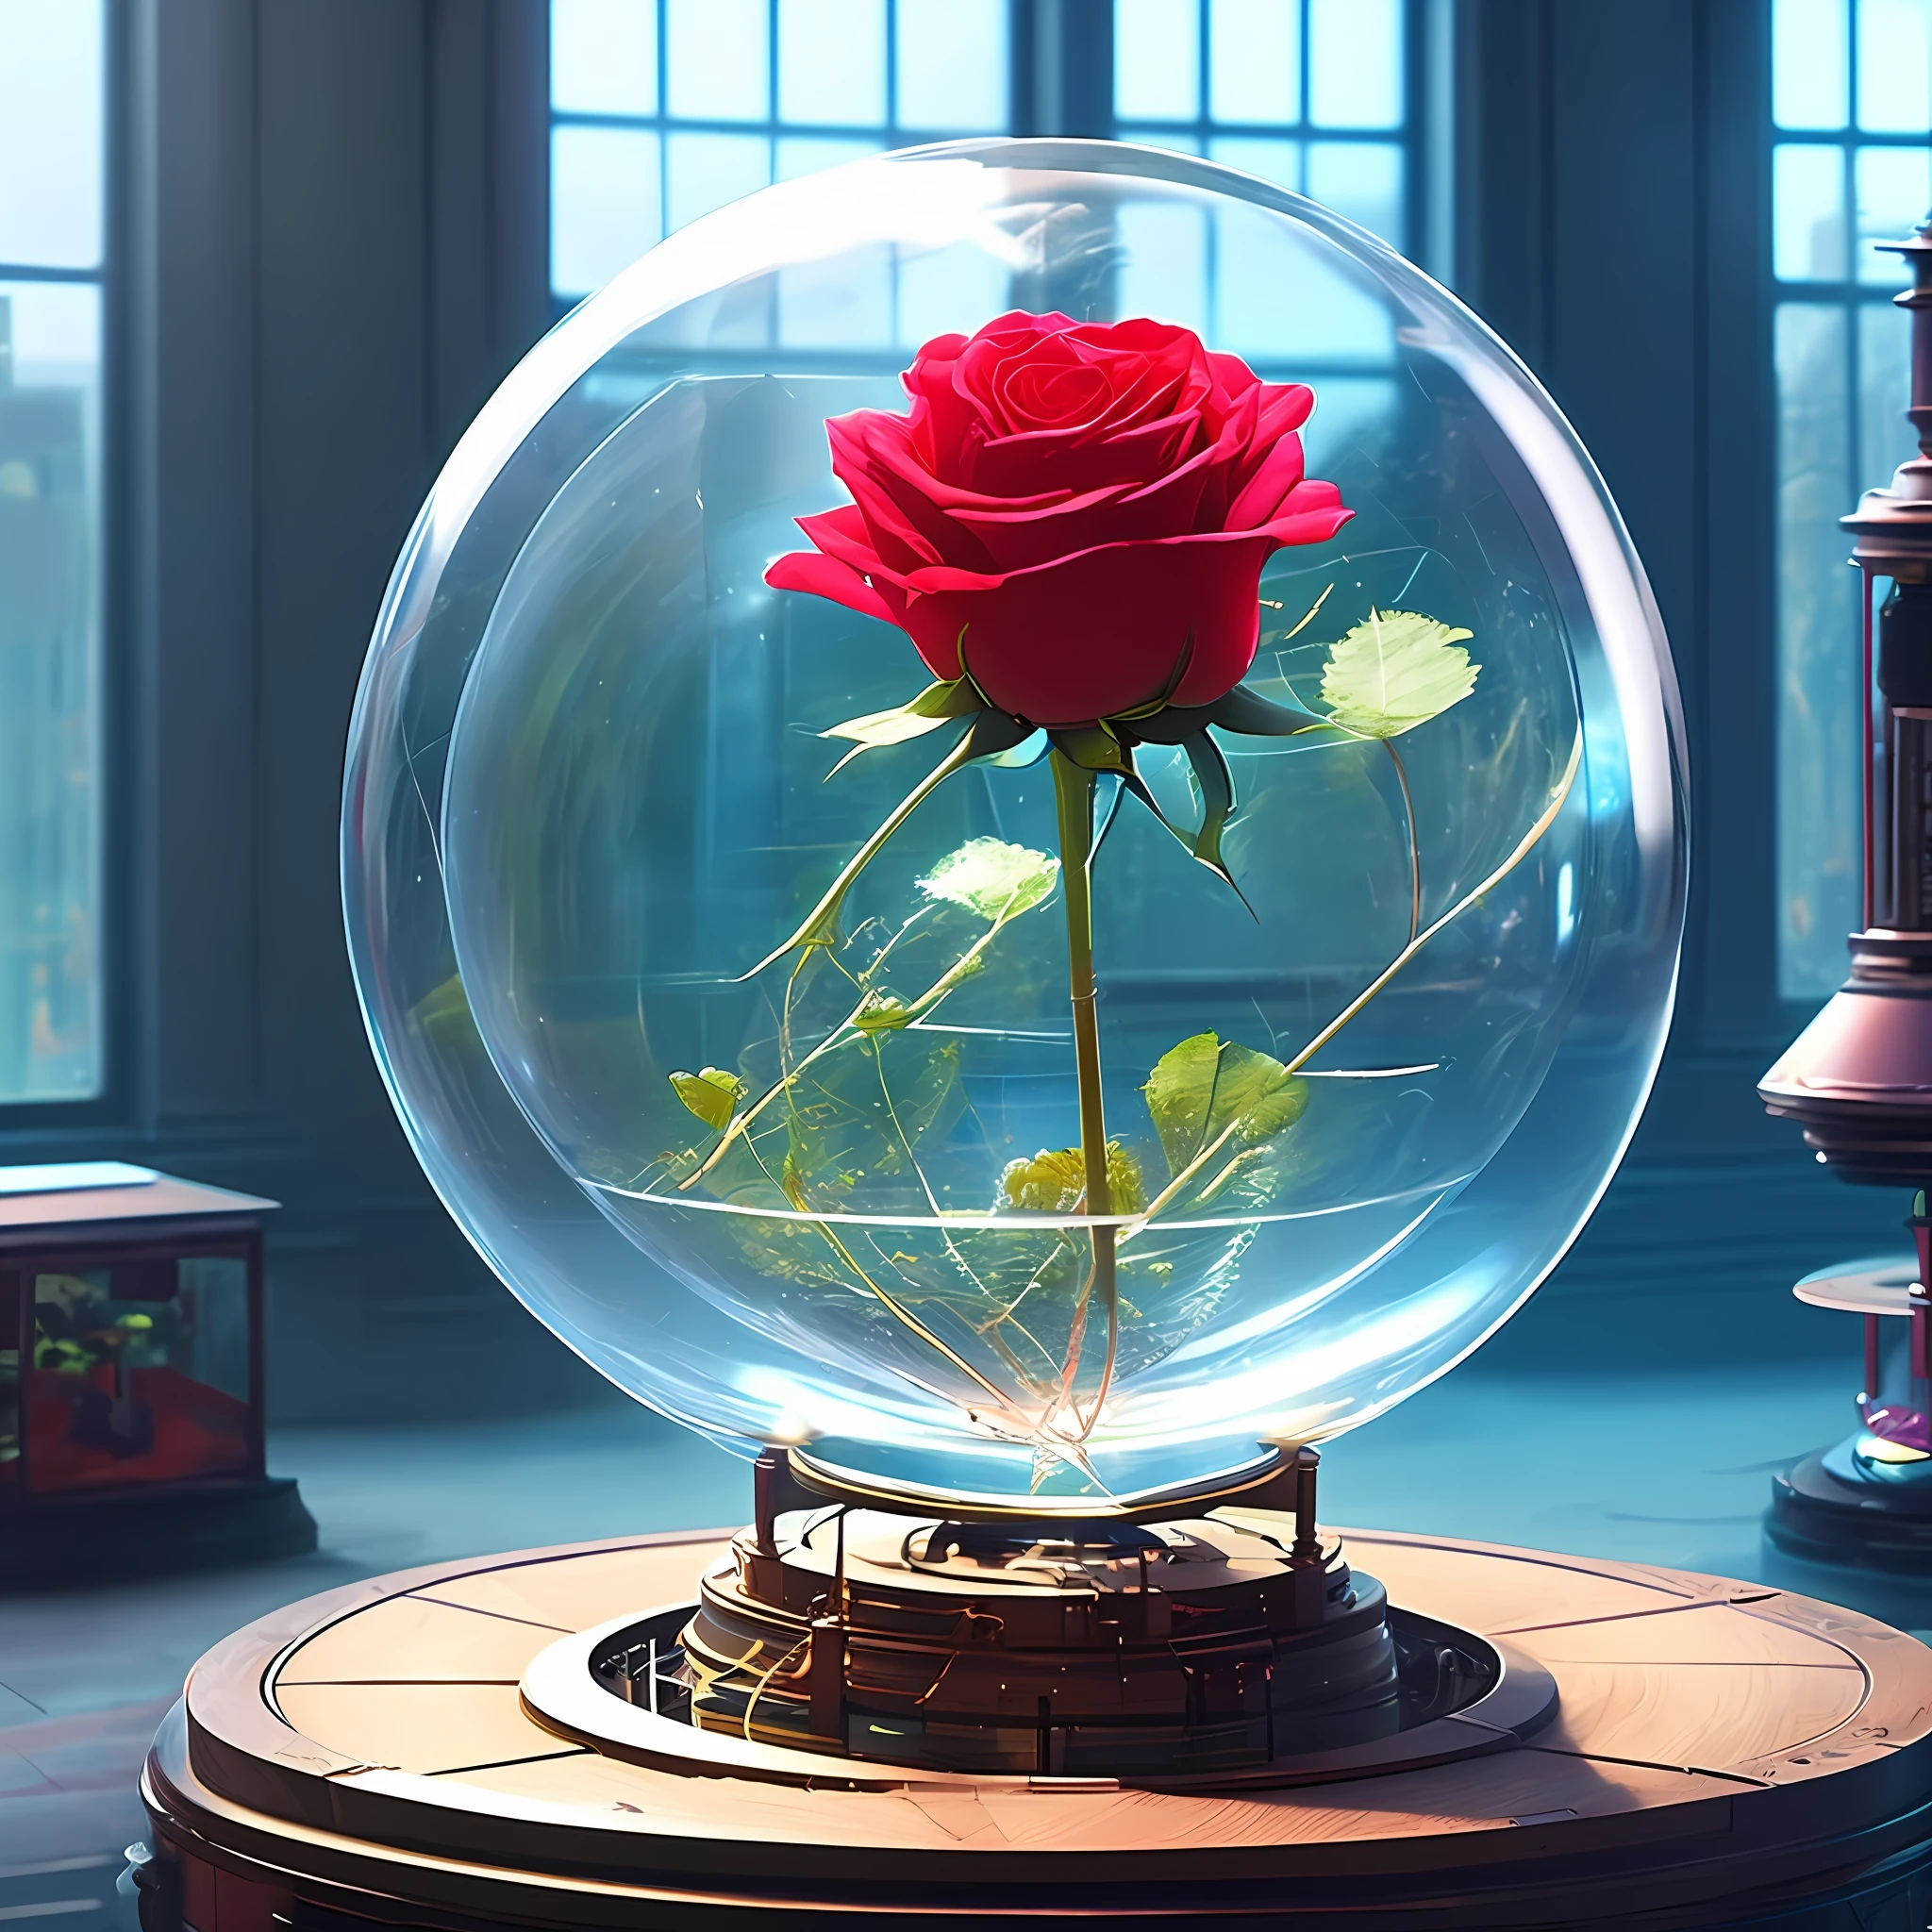 there is a rose floating in a 玻璃穹顶 on a music box base, 忧郁玫瑰柔和, 优雅的光芒, 红玫瑰, 透明玻璃花瓶, 优雅女士, 玻璃穹顶s, 自然点玫瑰&#39;, 灯光美丽, 典雅灯光, 优雅, 罗莎莉亚, 玻璃穹顶, 美丽的照明, 在一个矮圆形玻璃花瓶中,  巨型机械玫瑰, 科幻小说, 发明, 科幻, 复古未来主义